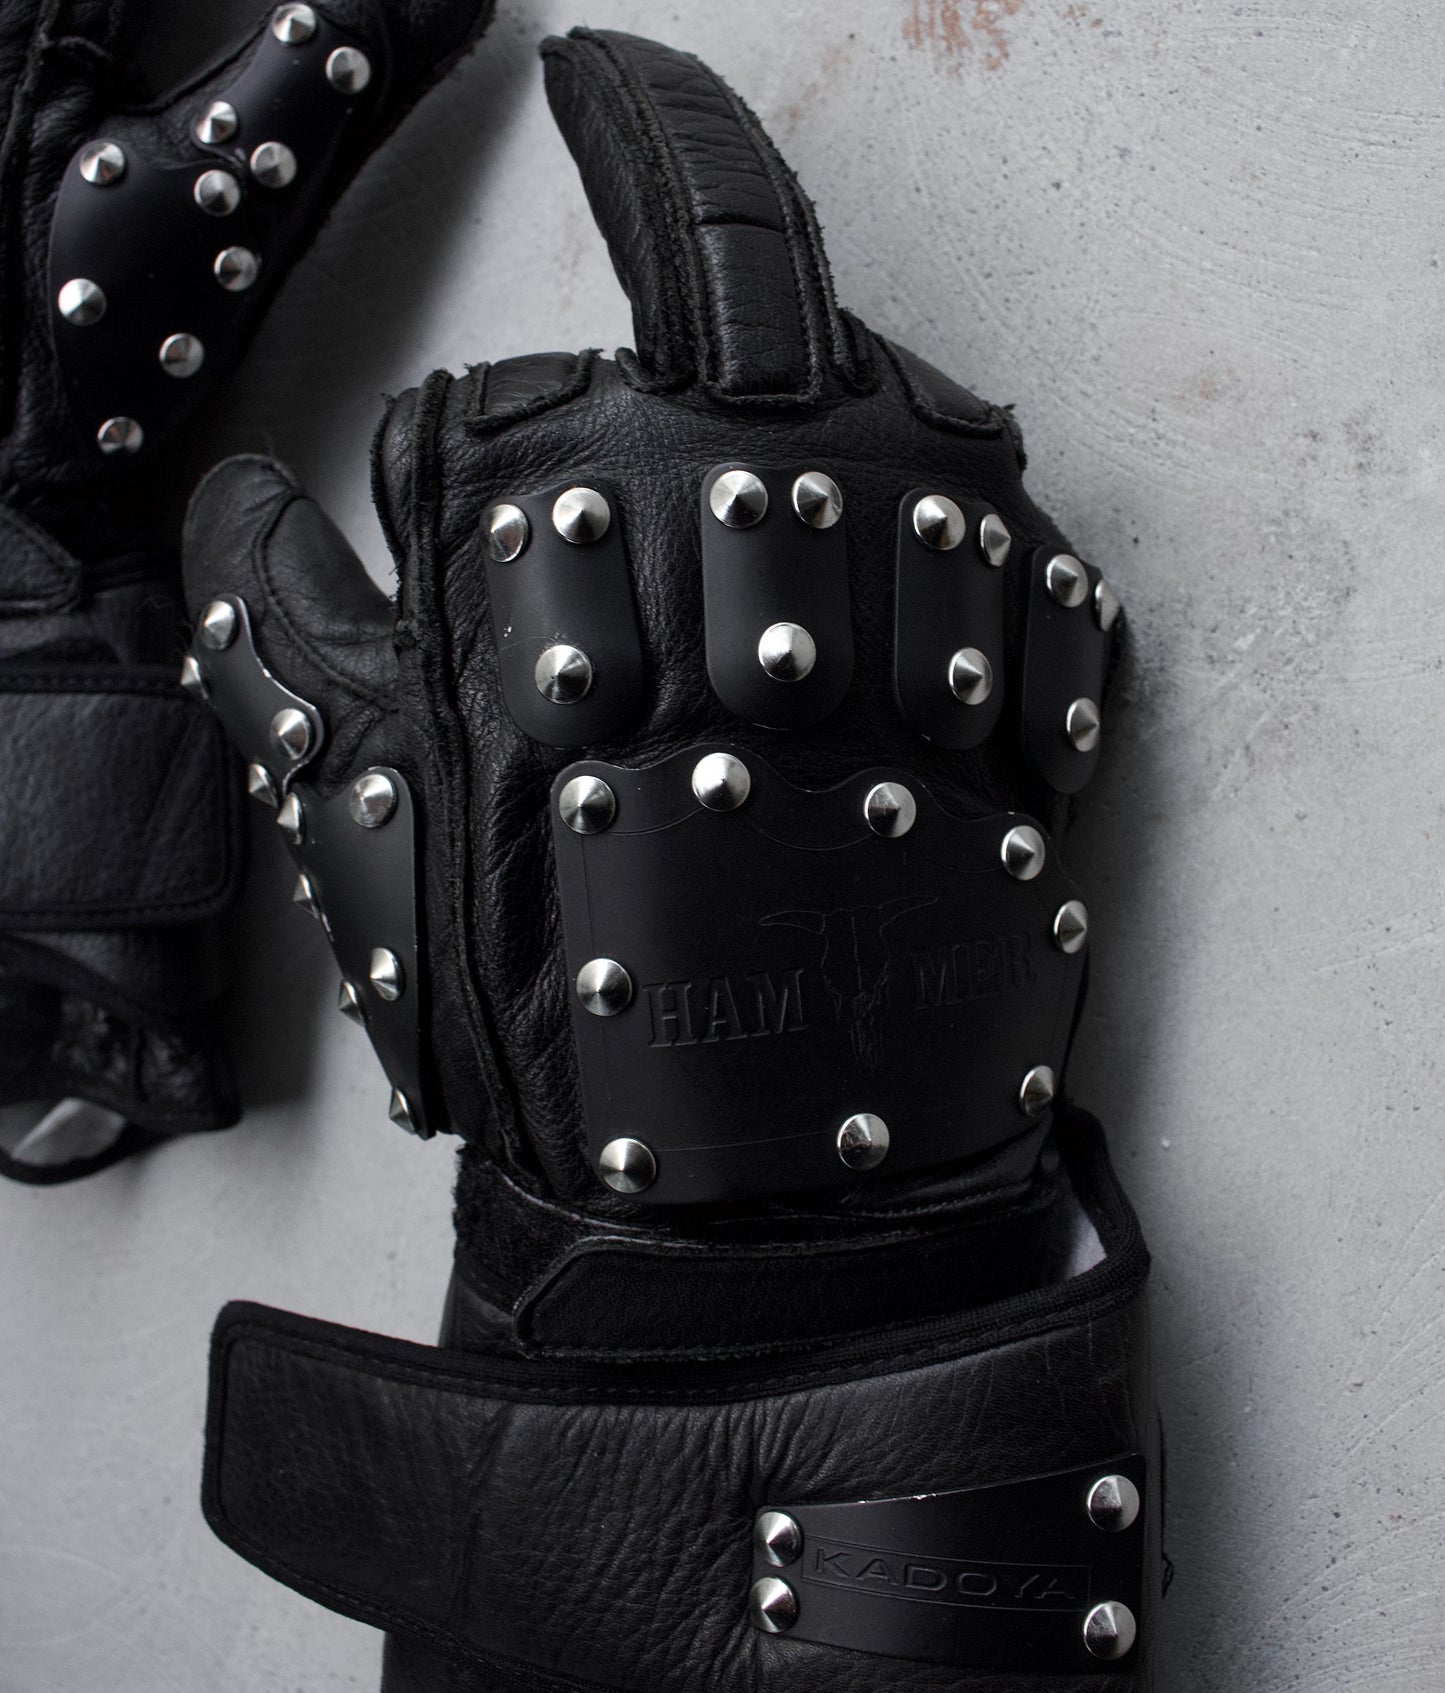 Kadoya “HAMMER” Studded Motorcycle Gloves